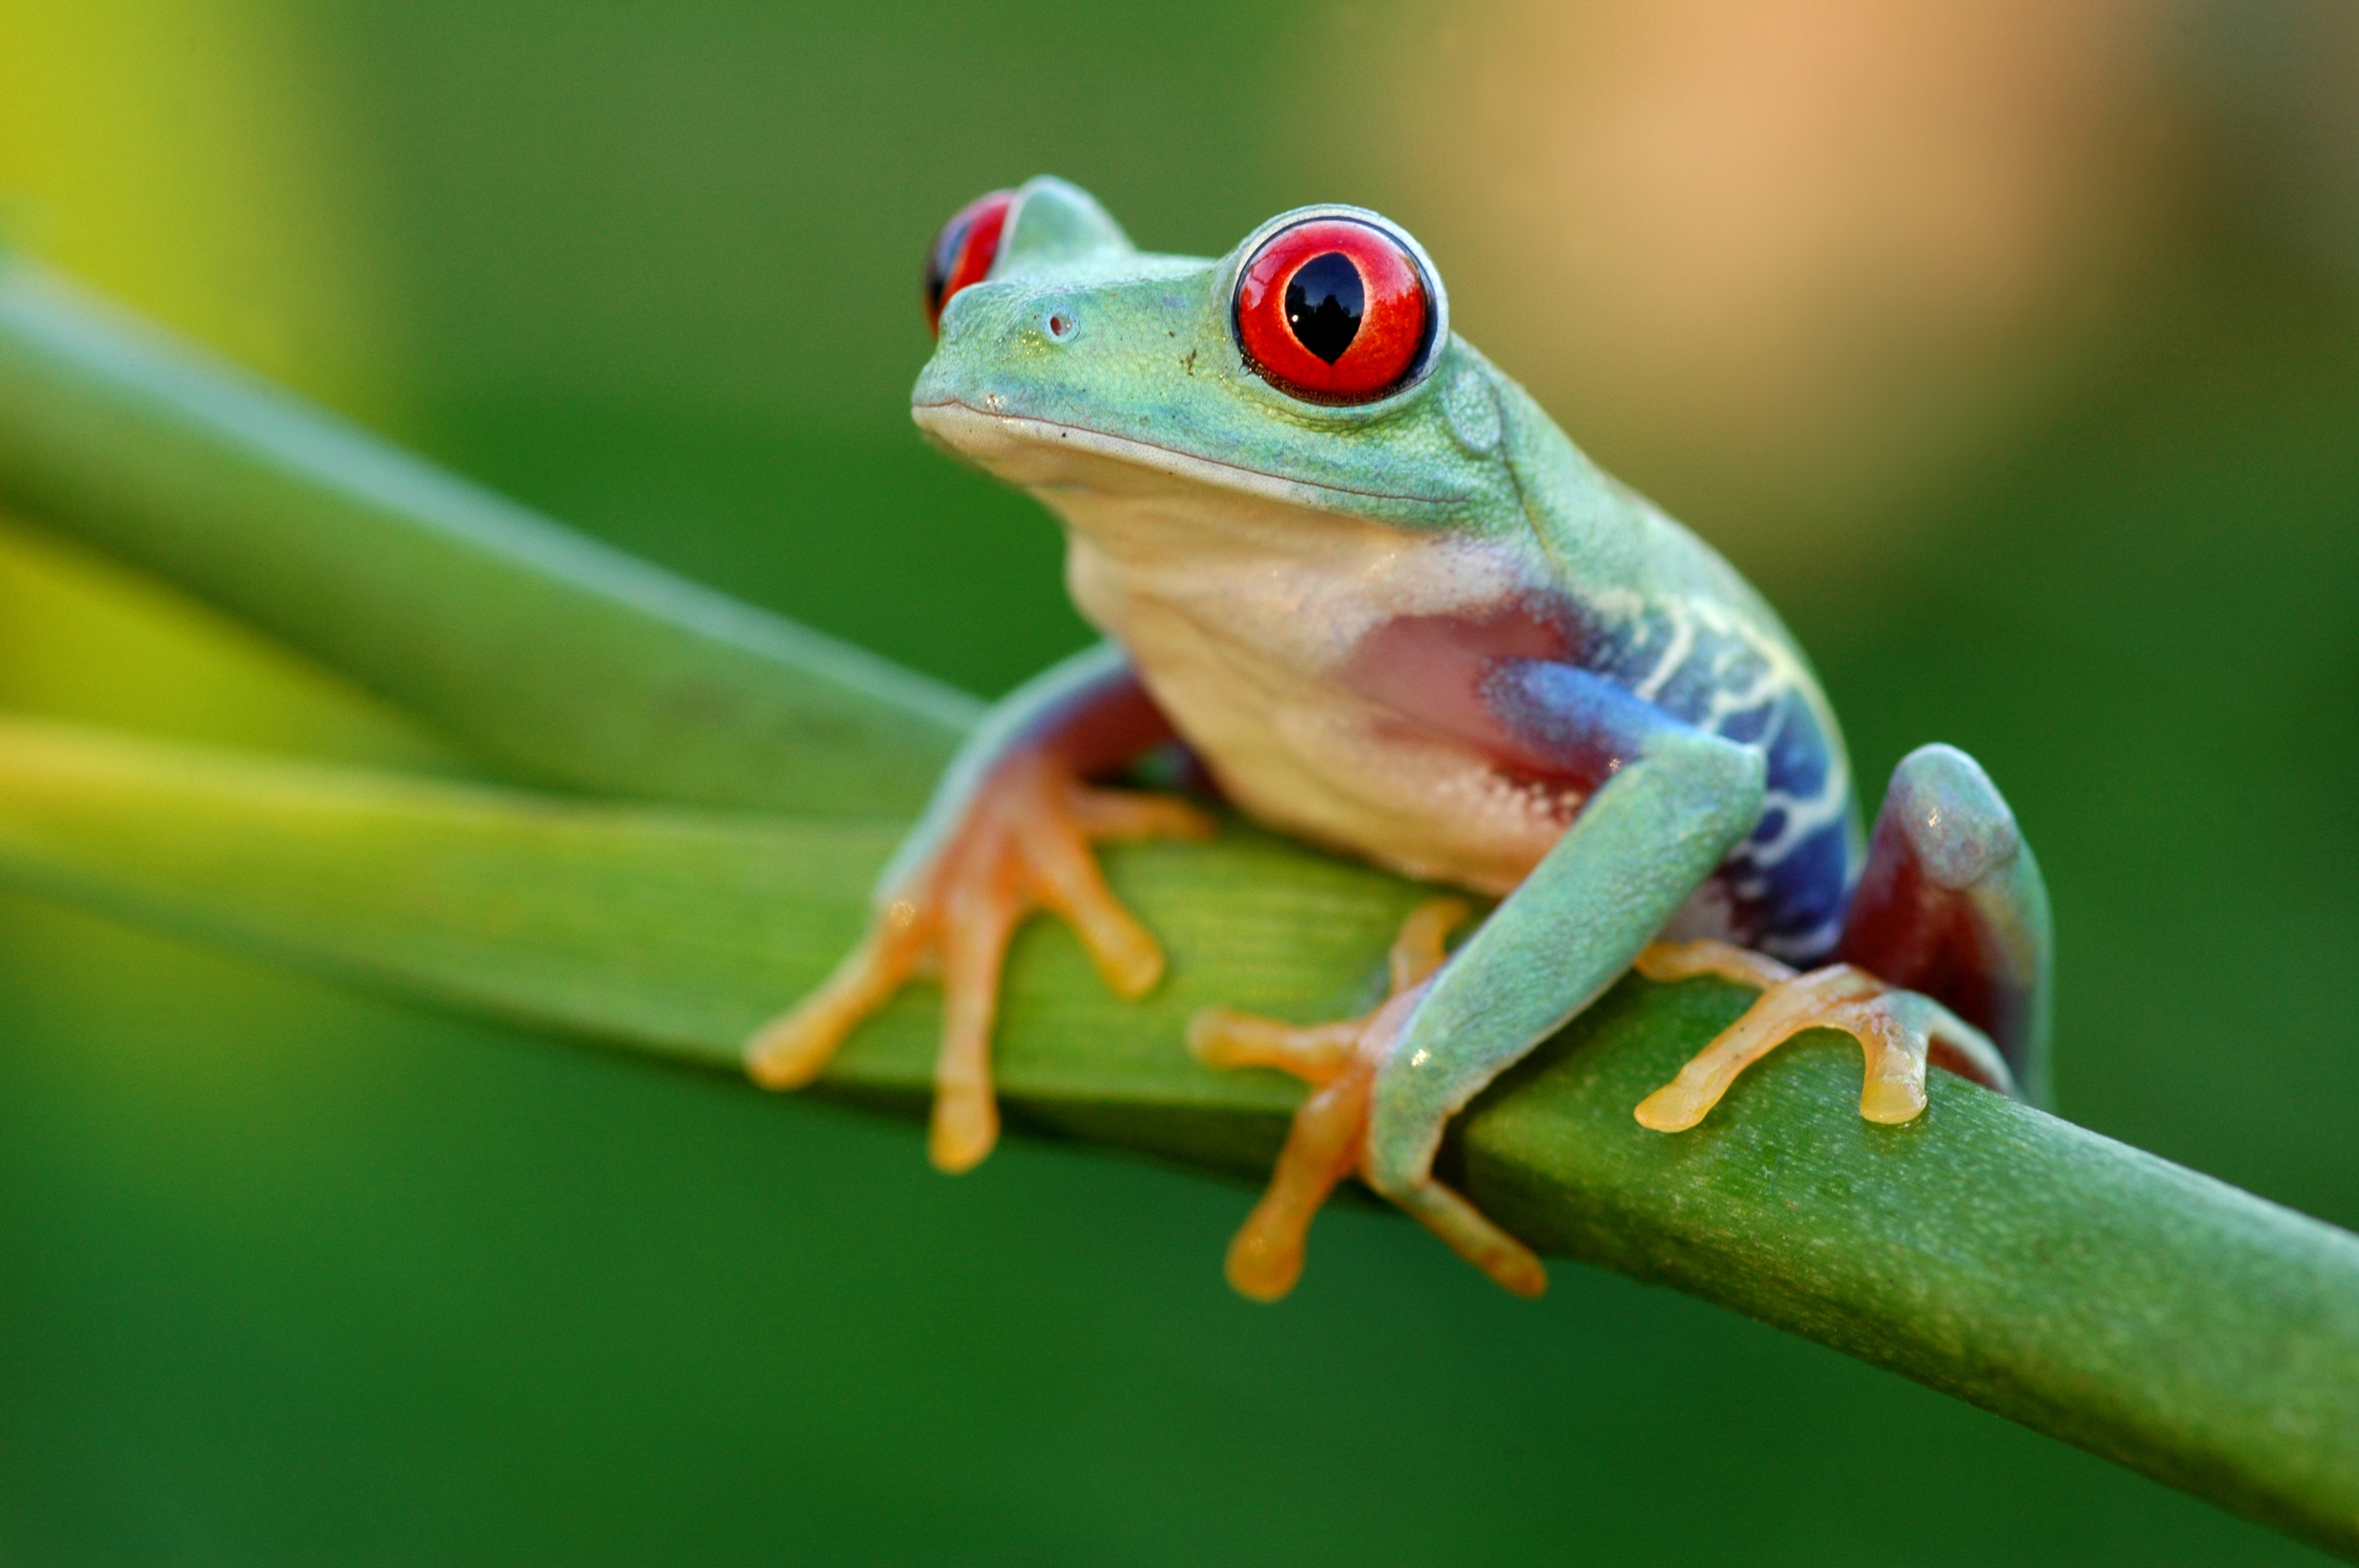 Detail Image Of A Frog Nomer 11